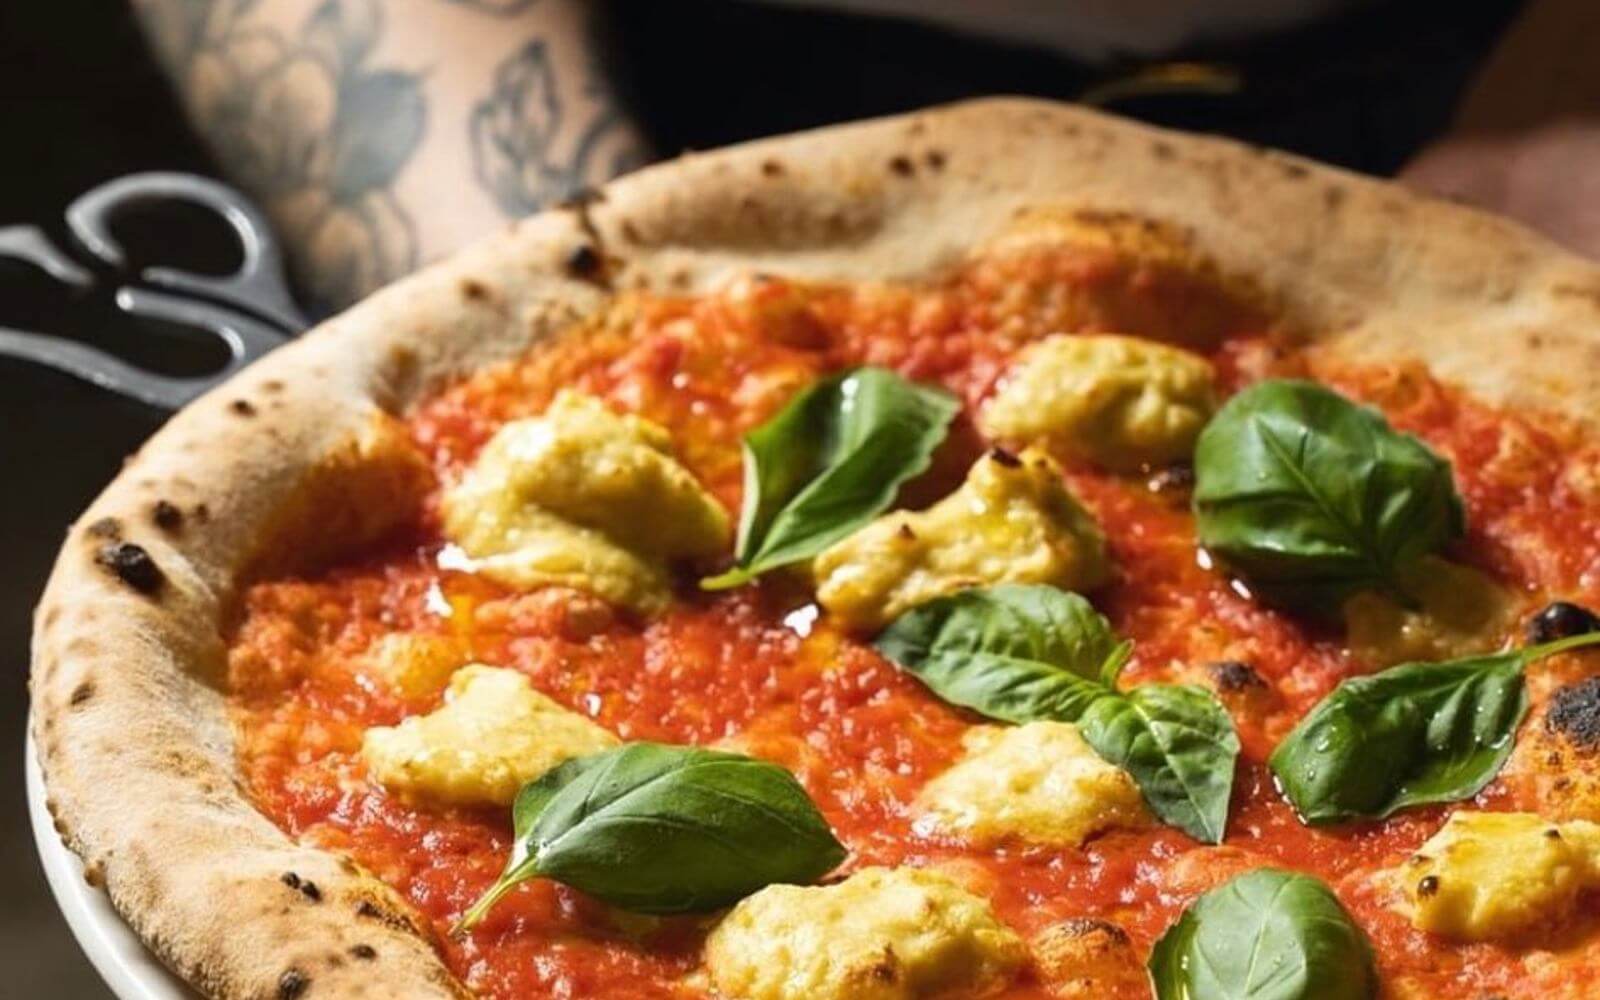 a vegetarian pizza at nicli antica pizzeria